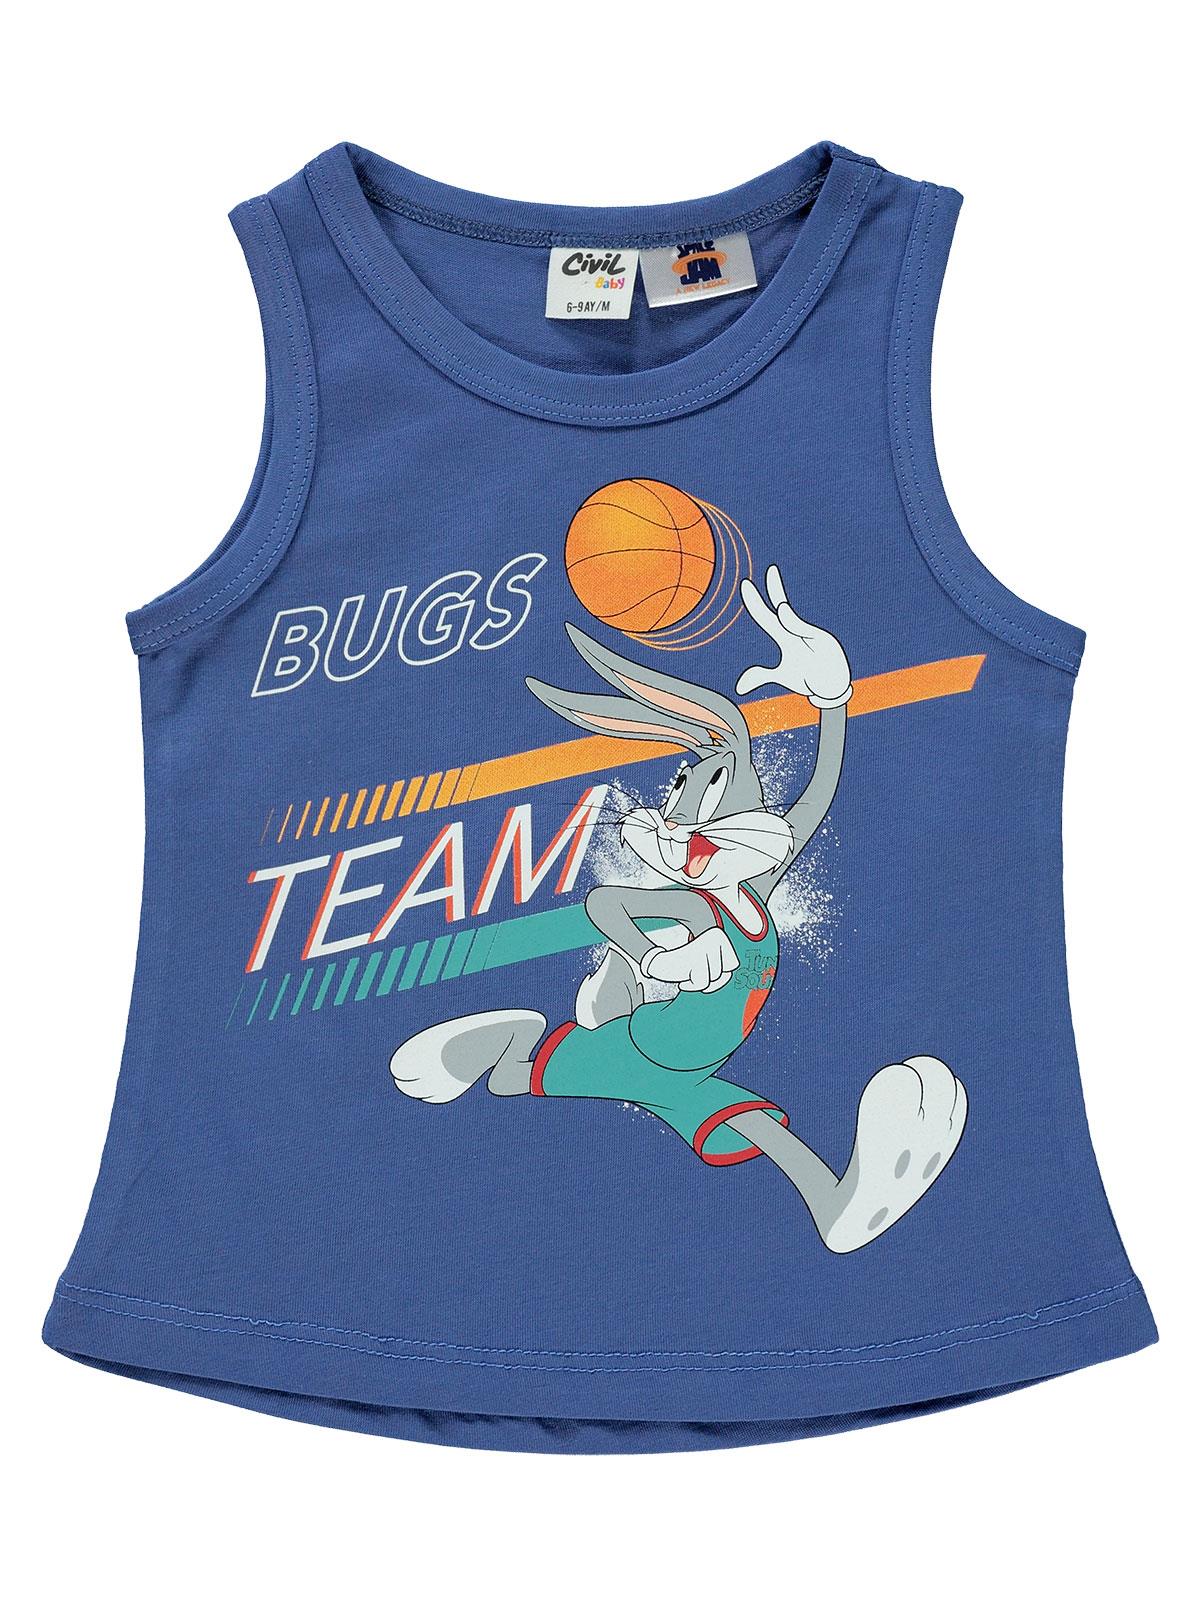 Bugs Bunny Erkek Bebek Tişört 6-18 Ay Lacivert